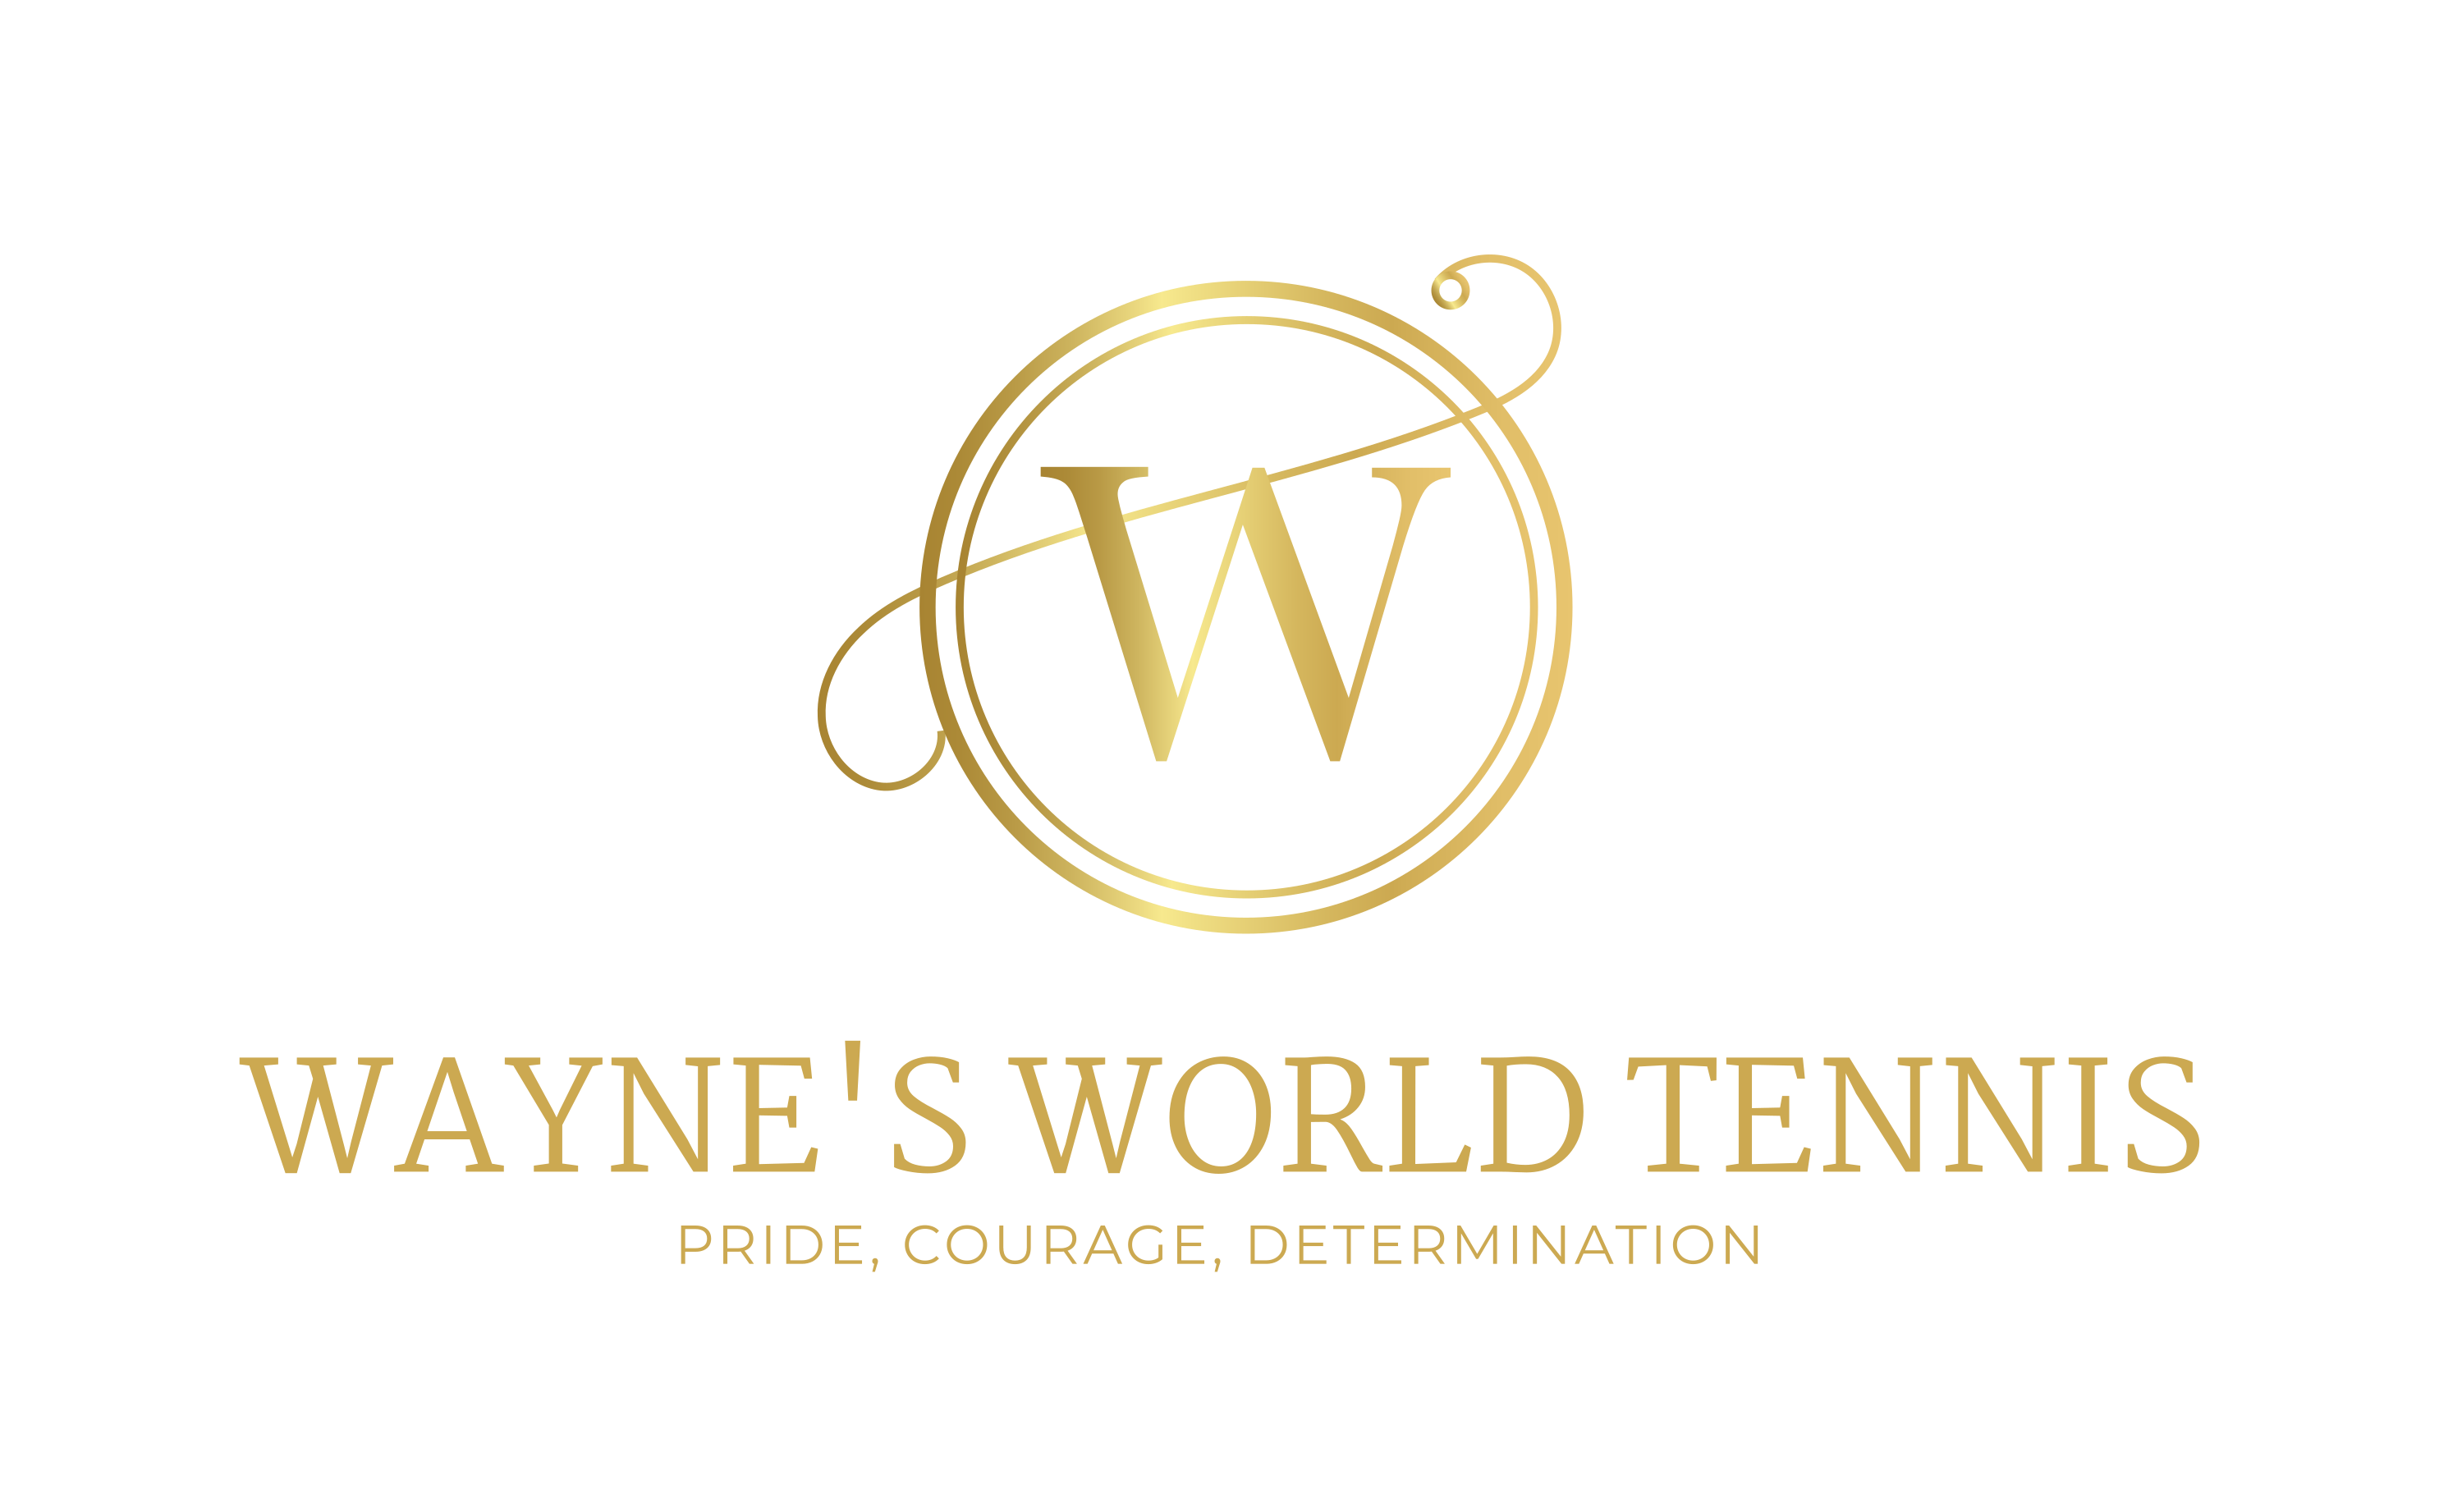 Wayne’s World Tennis